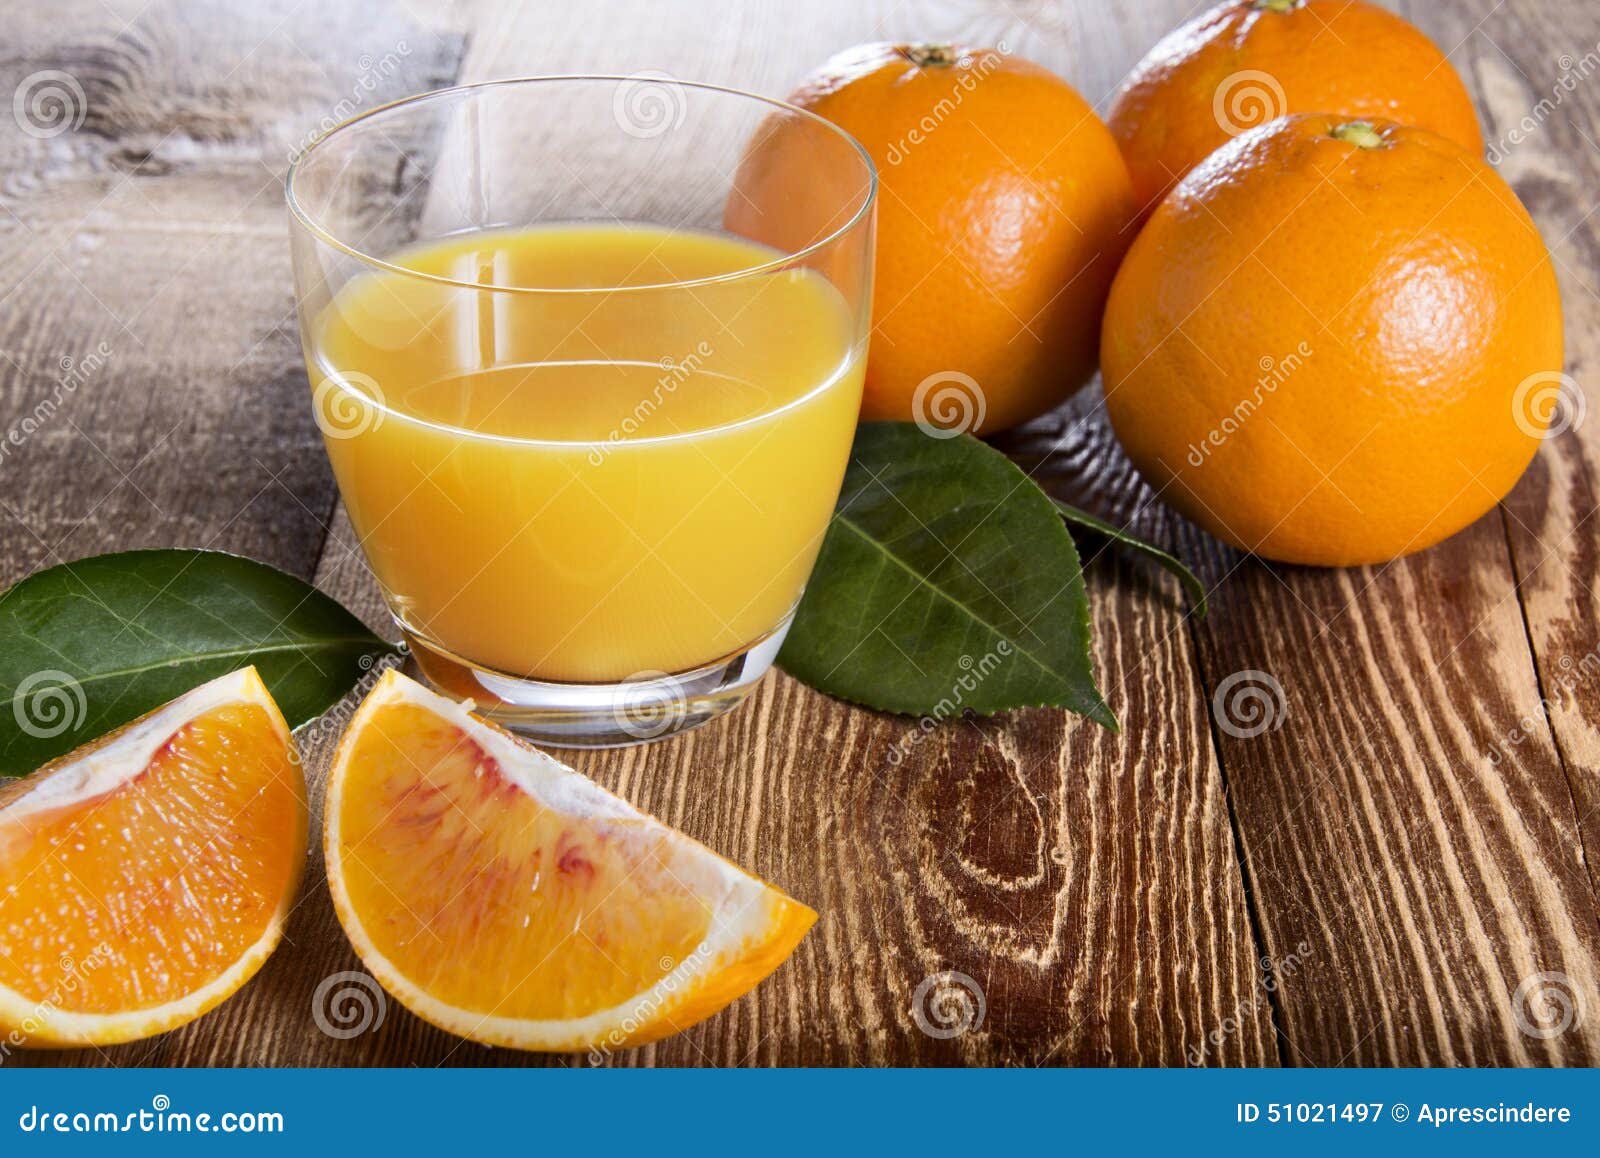 Orange juice glass stock image. Image of dieting, eating - 51021497